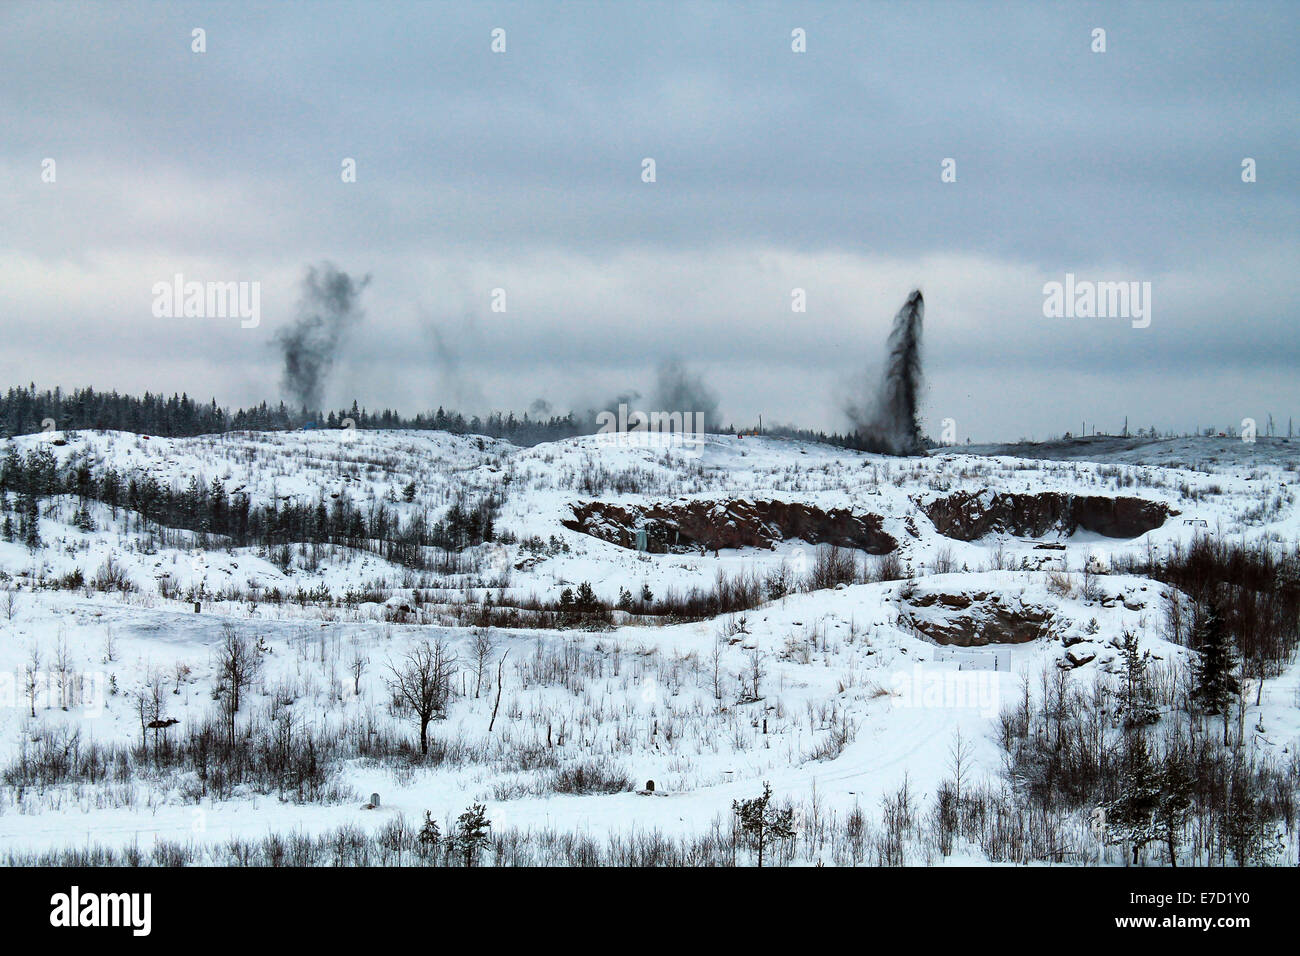 Artillery Fire in Pahkajärvi, Finland Stock Photo